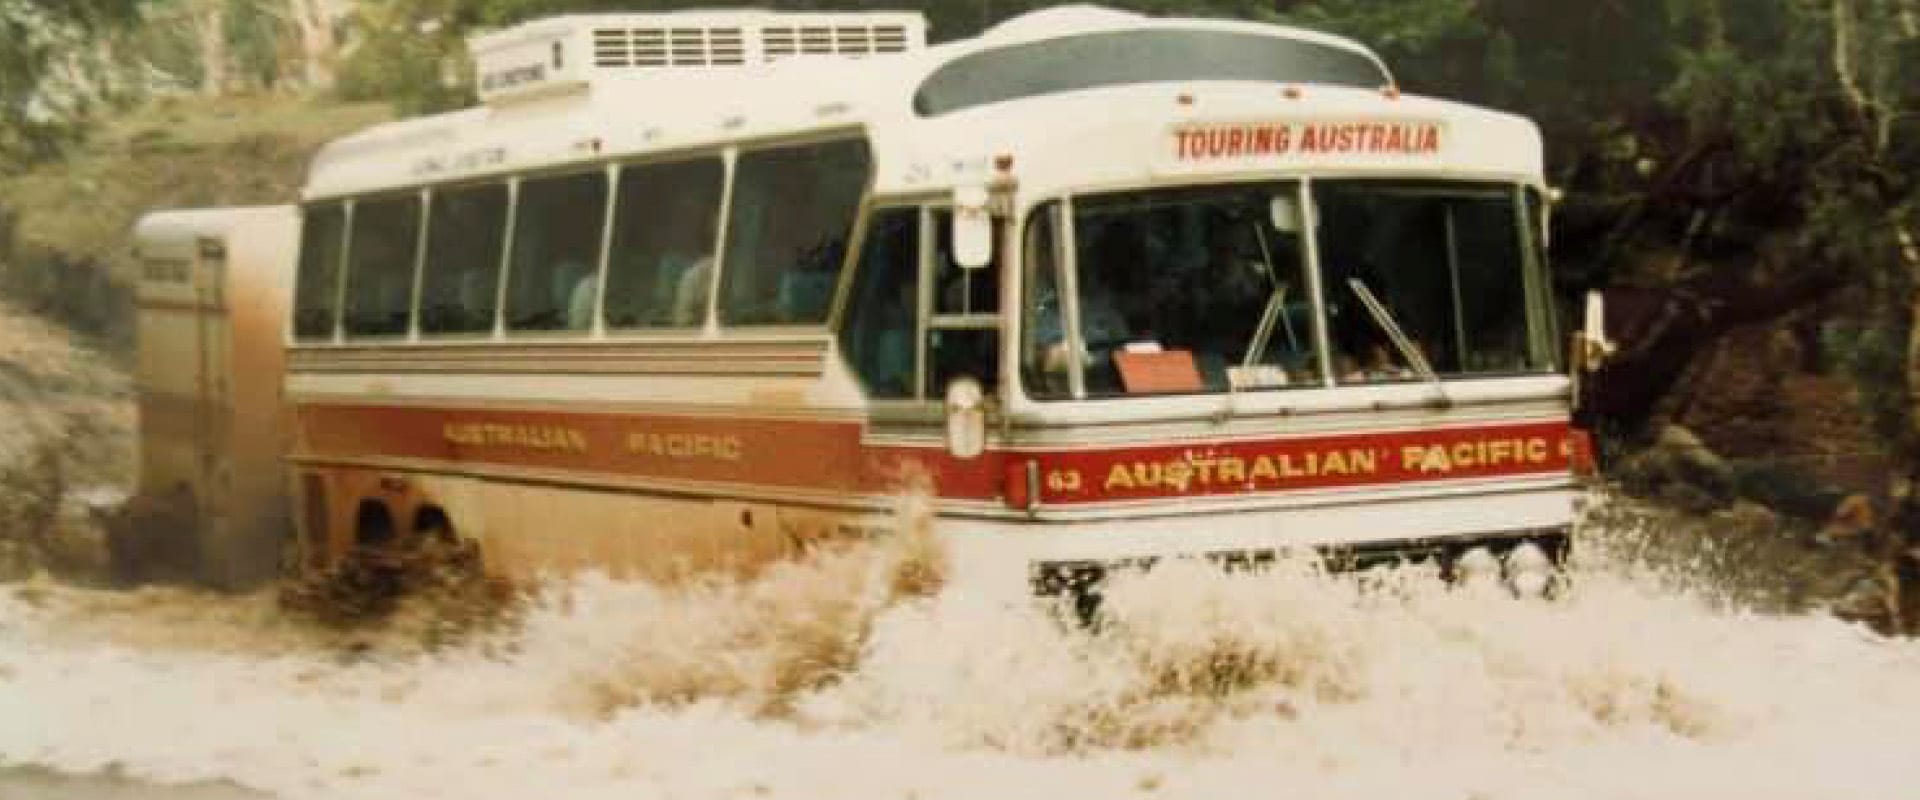 historical apt bus fording river australia